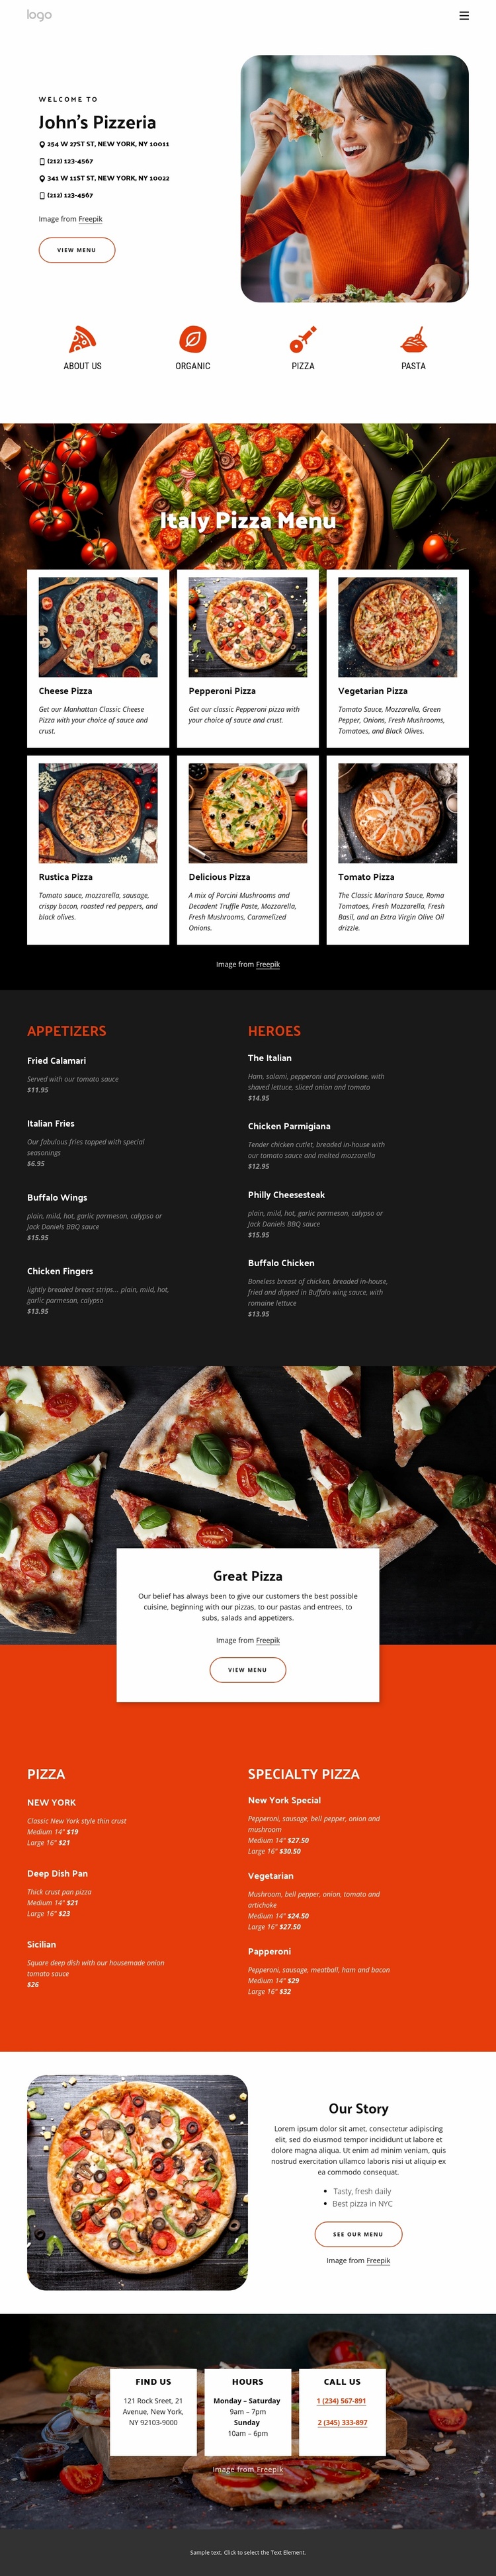 Pizzeria eCommerce Website Design